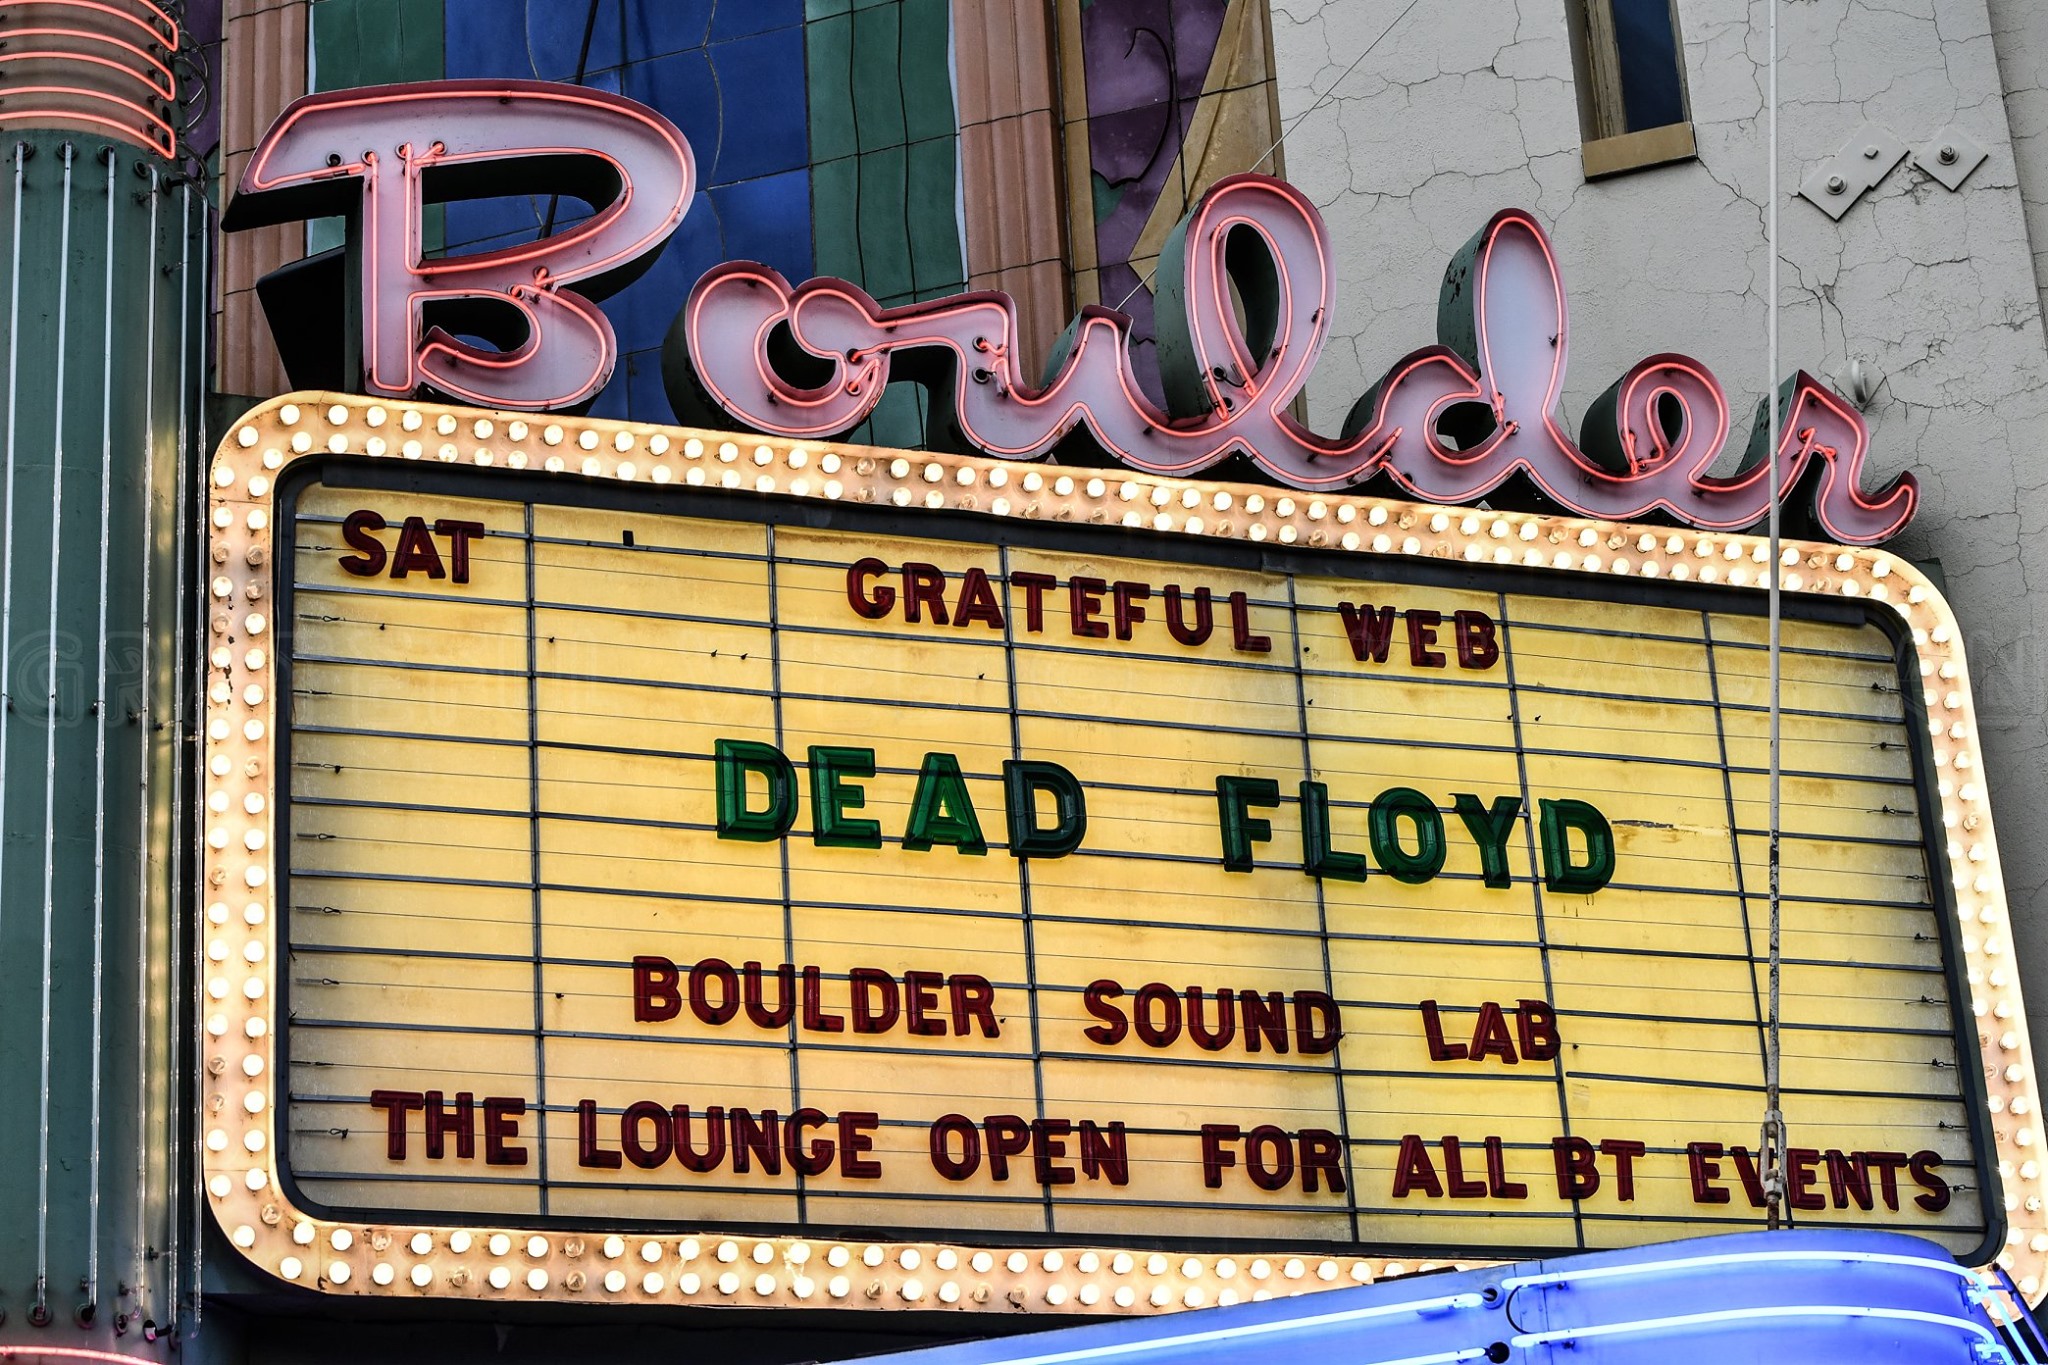 Dead Floyd - Boulder Theater